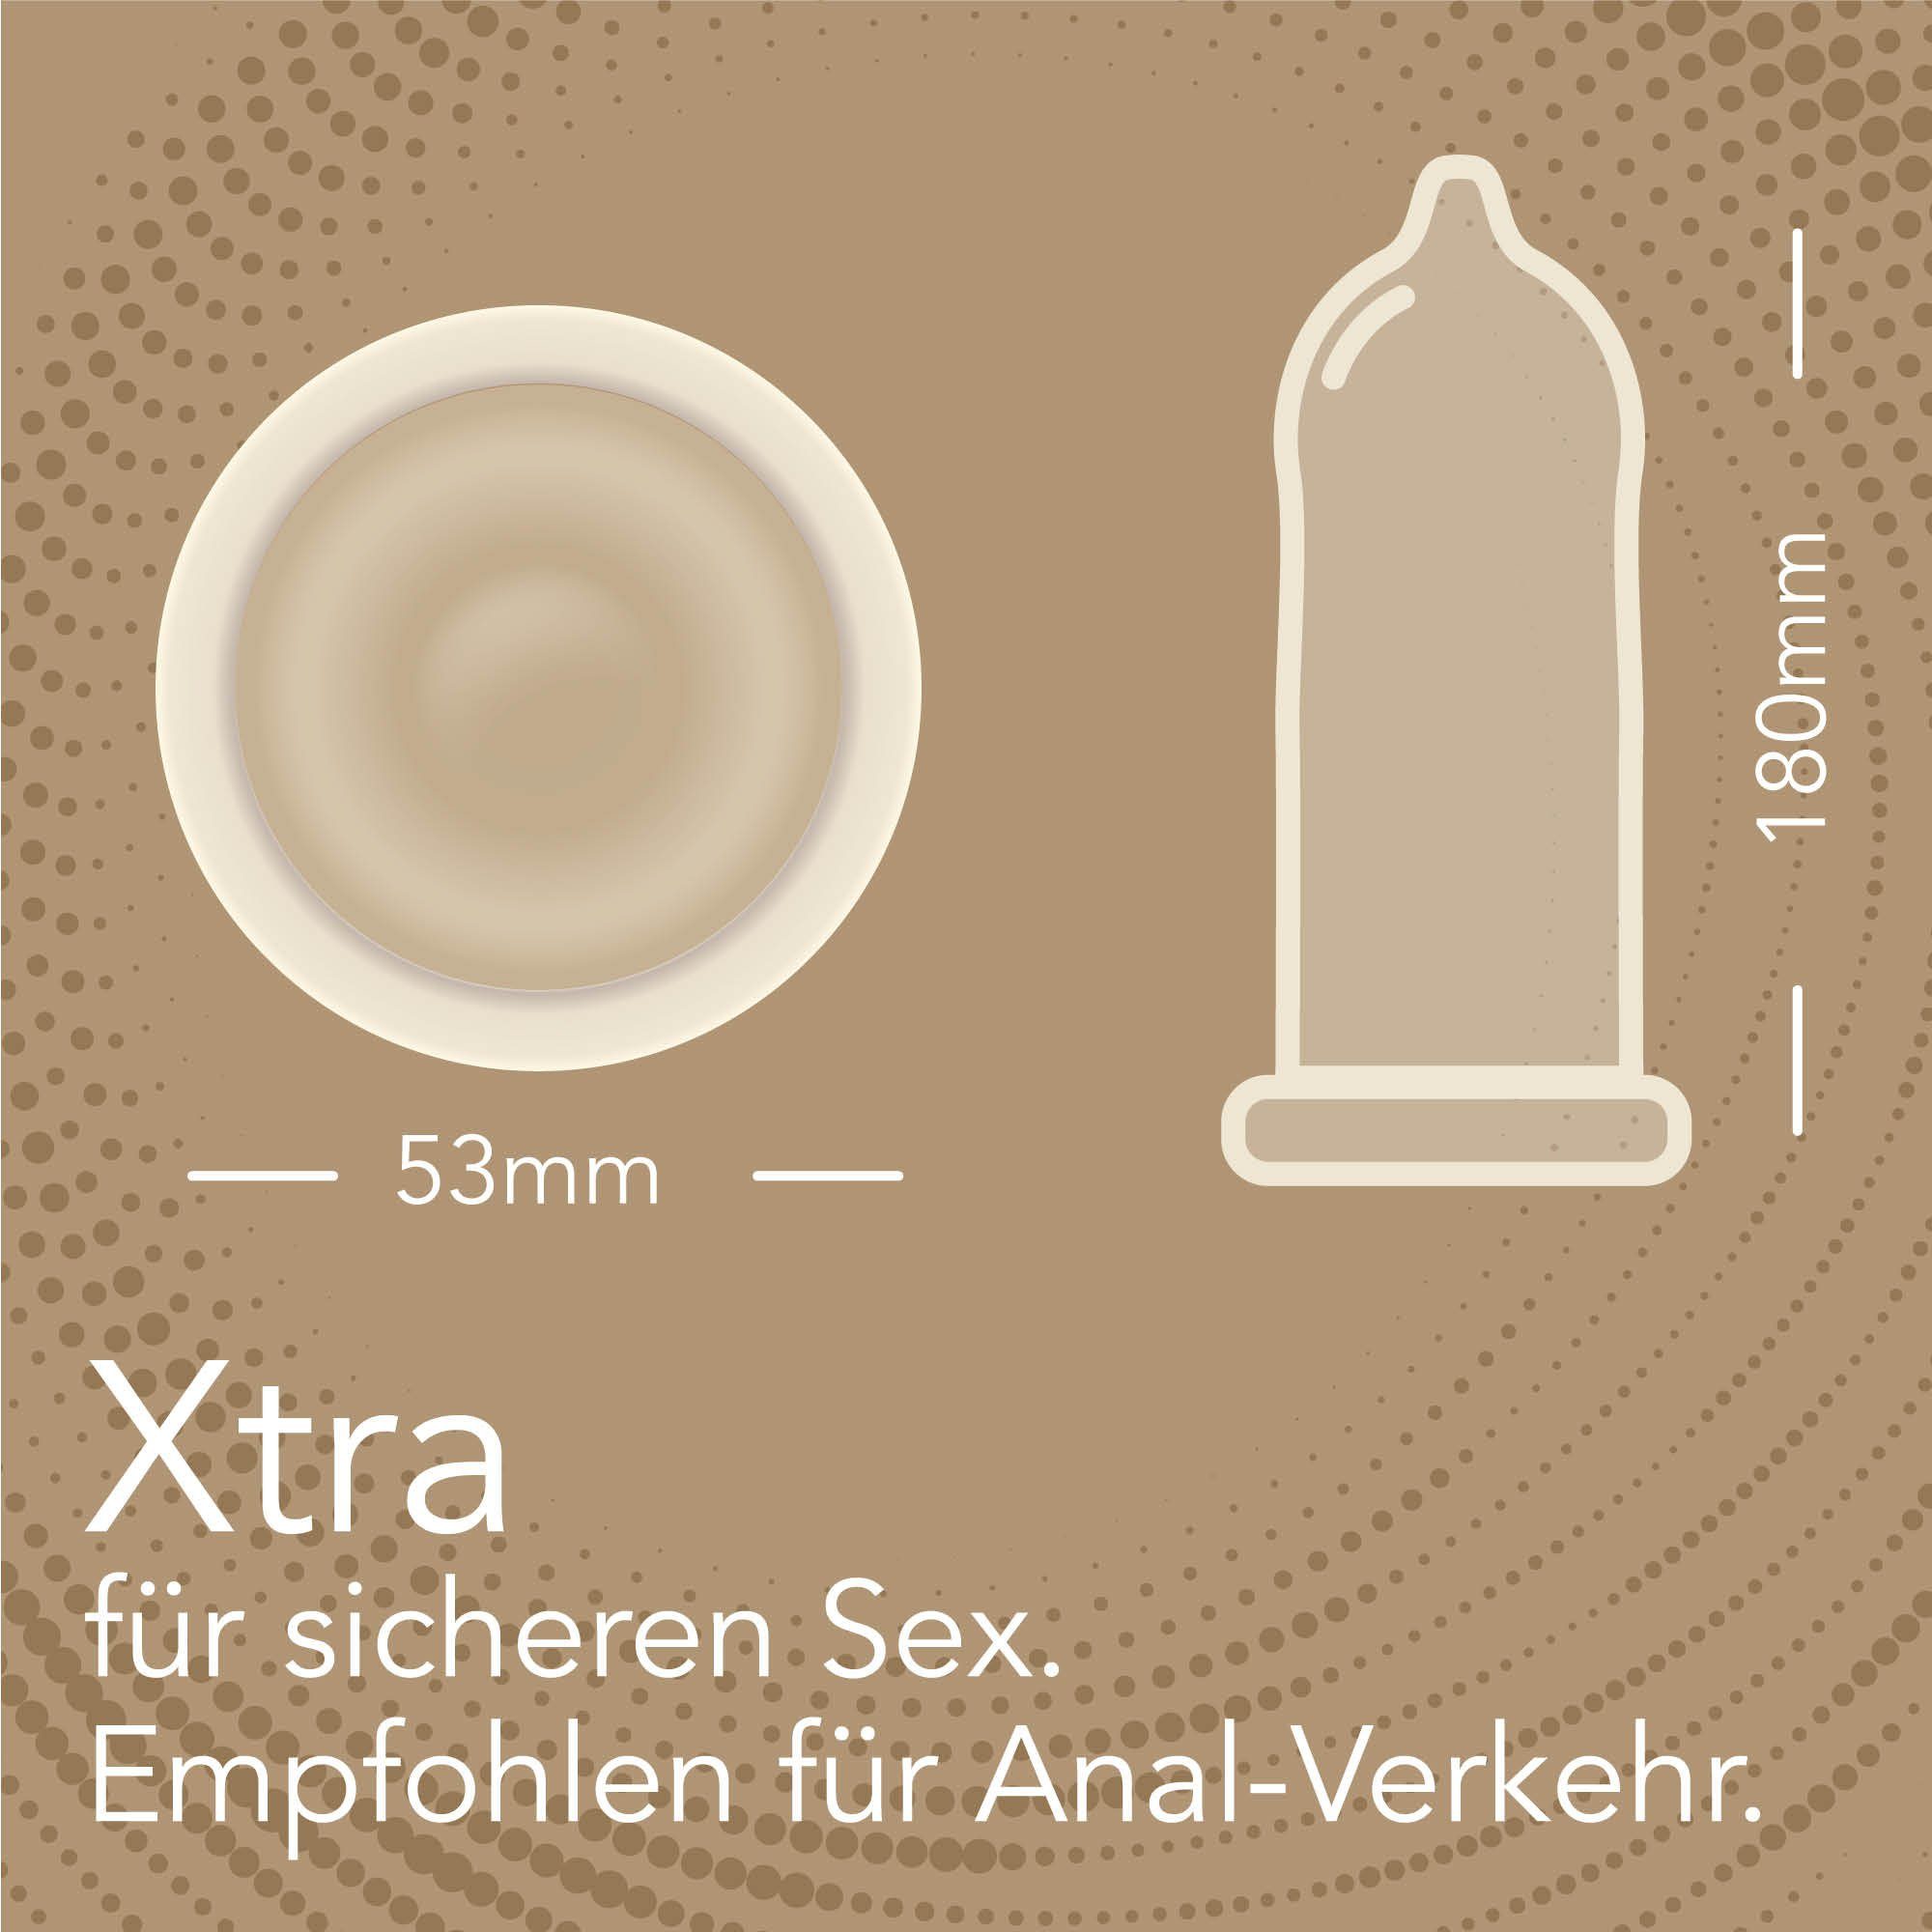 Fair Squared Kondome FAIR SQUARED aus Xtra Vegane hauchzart – mm Kondome 53 gehandeltem fair Kondome – Kondom Naturkautschuk gefühlsecht